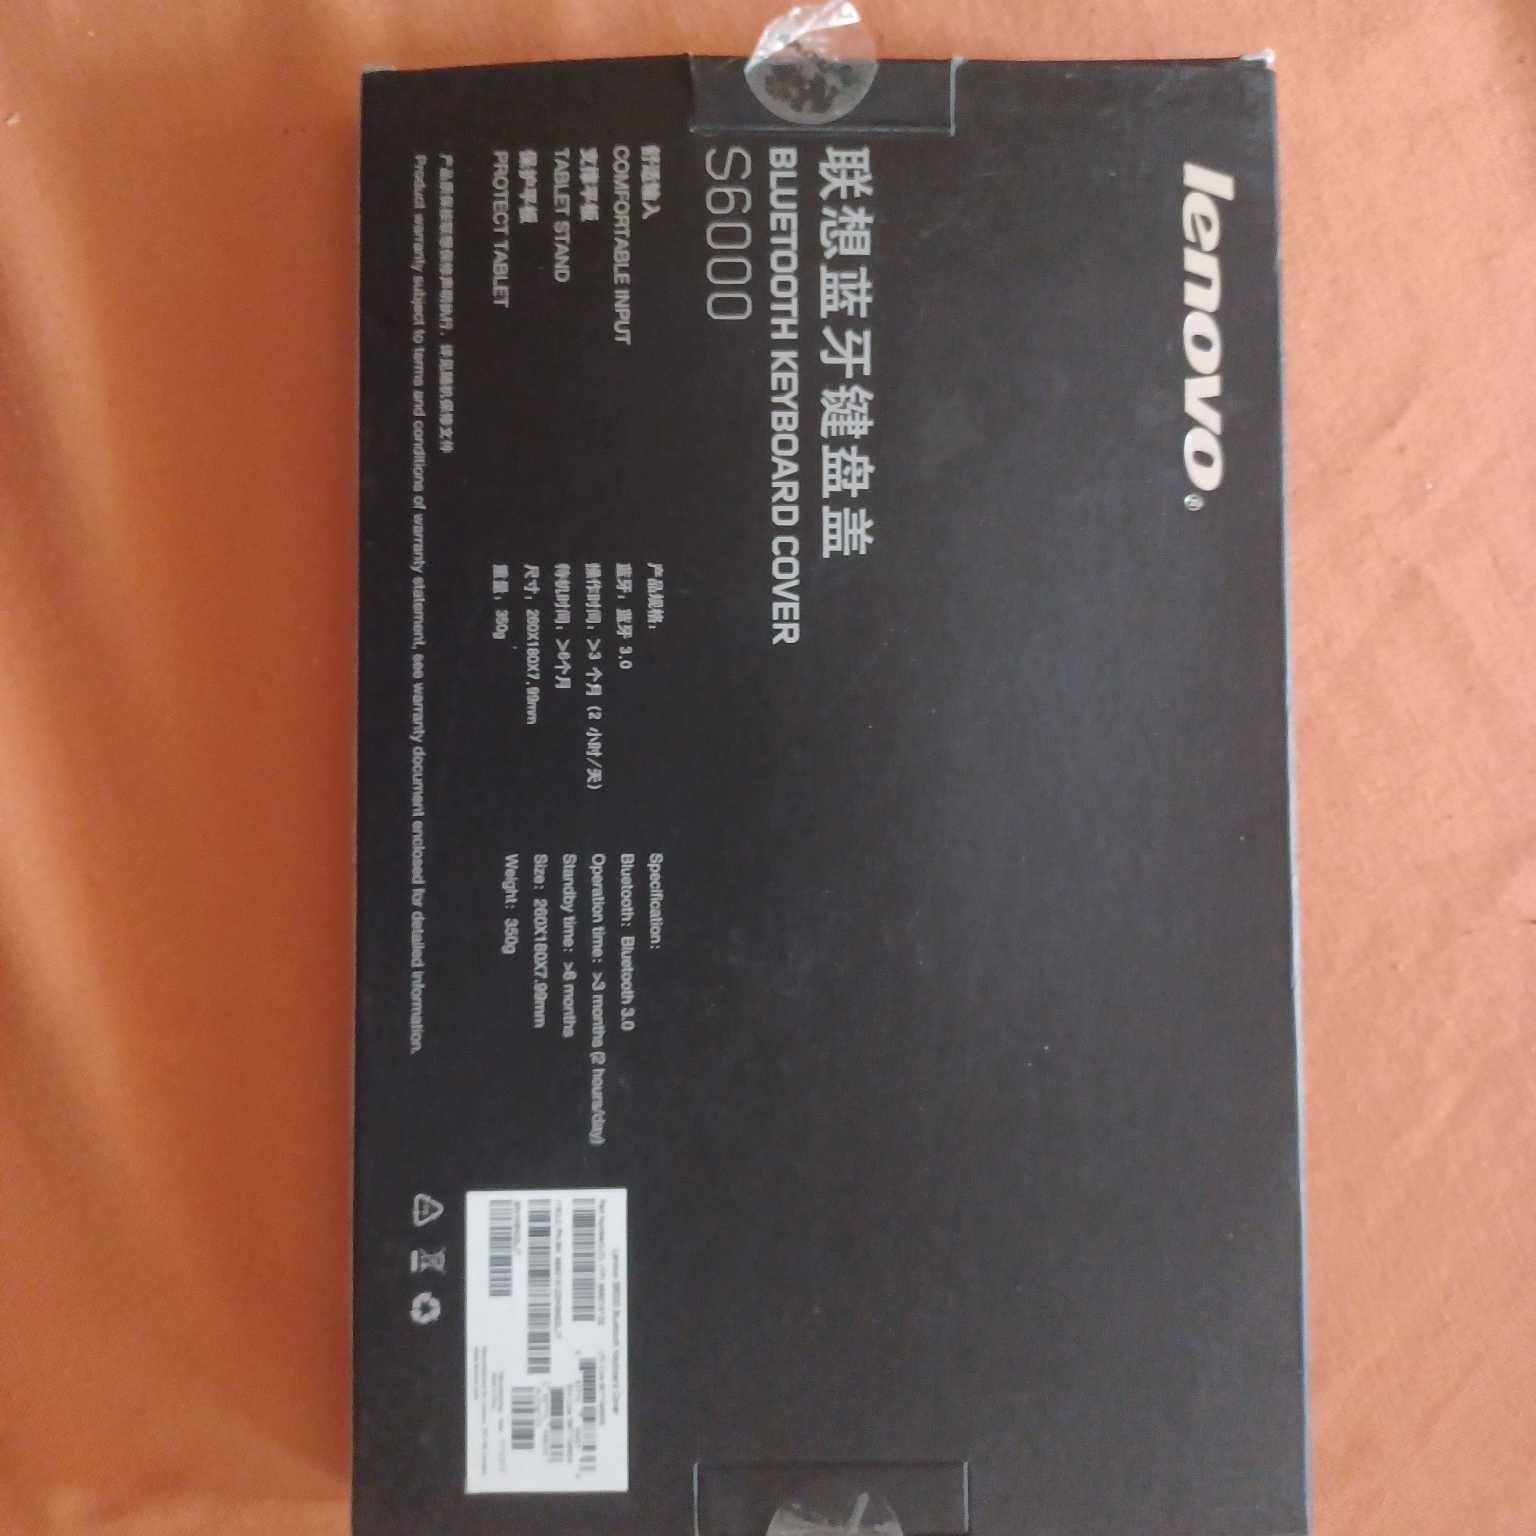 Klawiatura Lenovo IdeaTab S6000 Bluetooth Keyboard Cover